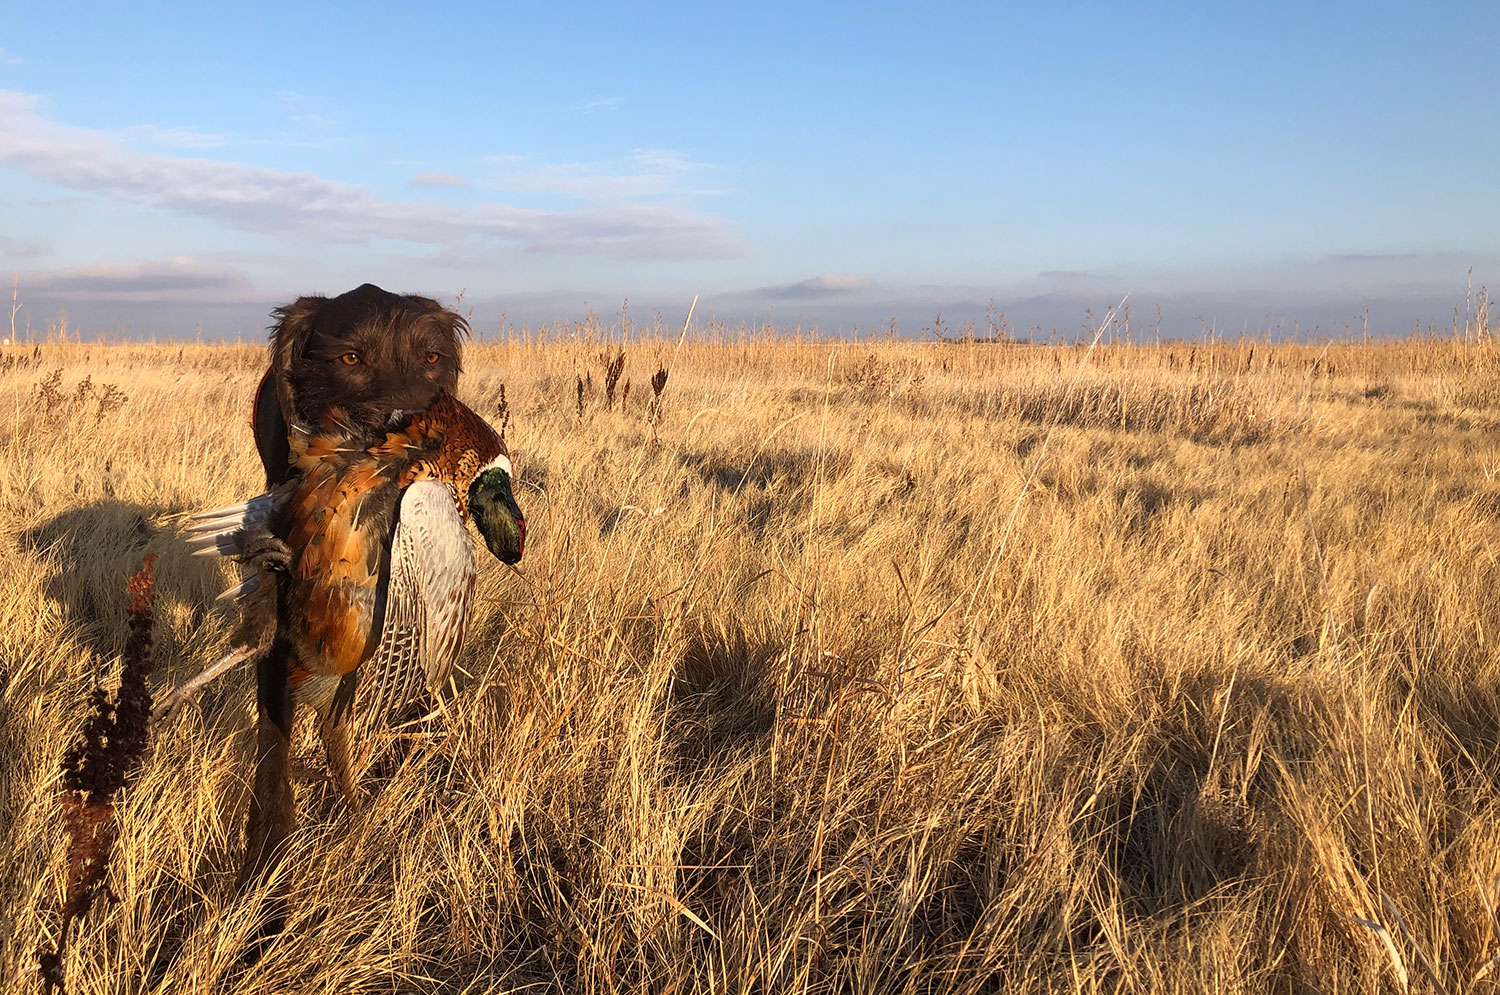 Hunting dog carrying pheasant